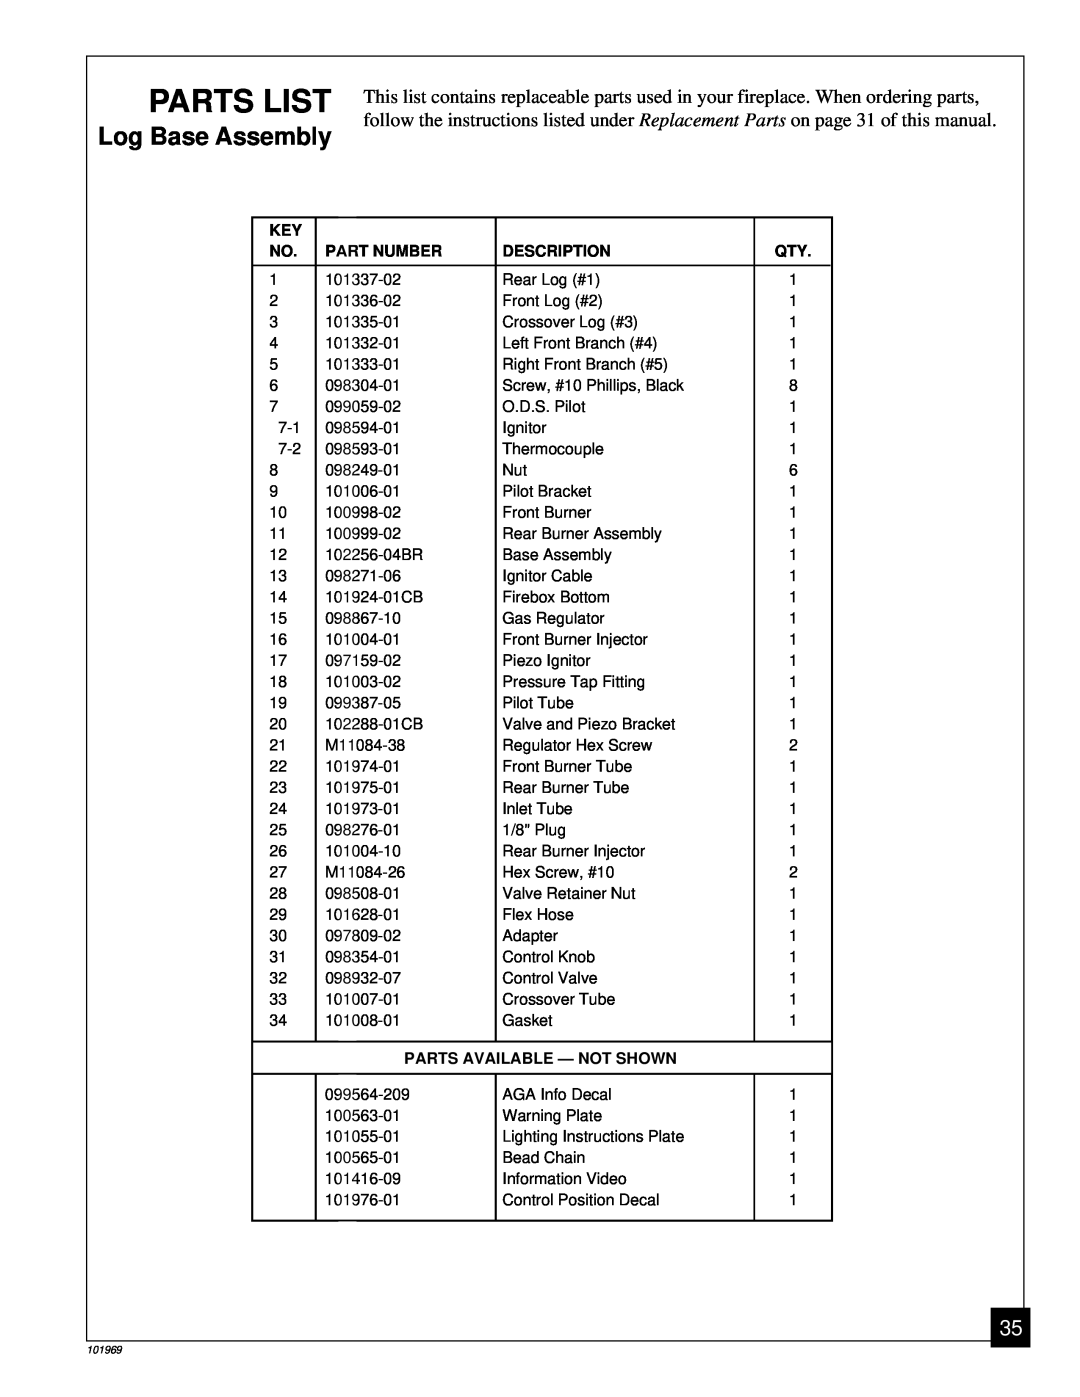 Desa UNVENTED (VENT-FREE) PROPANE GAS FIREPLACE installation manual Parts List, Log Base Assembly, Part Number, Description 